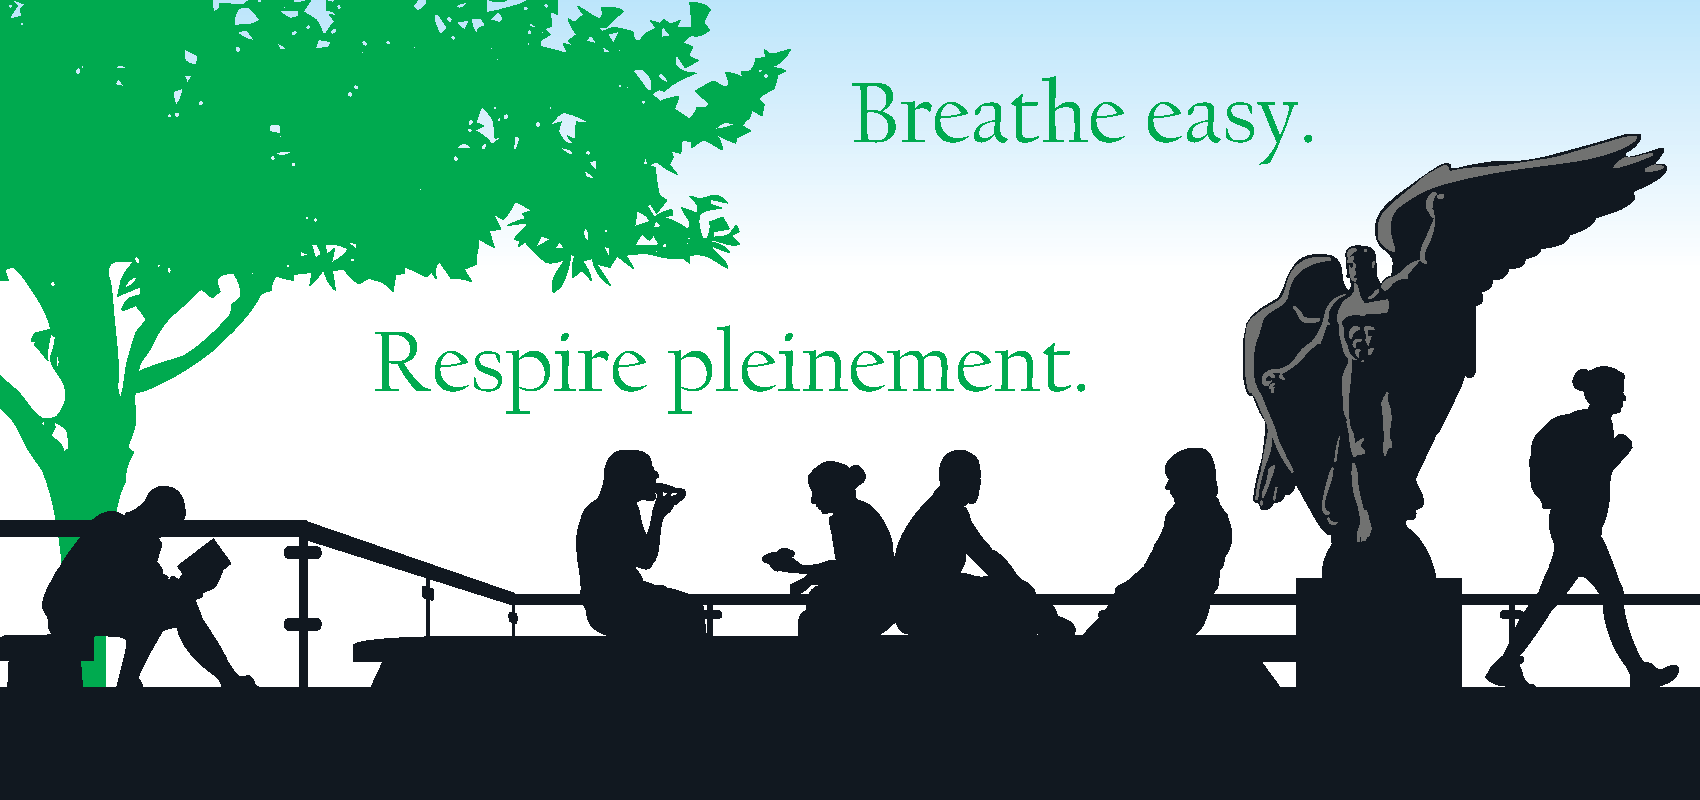 Breathe easy. Respire pleinement campaign image.